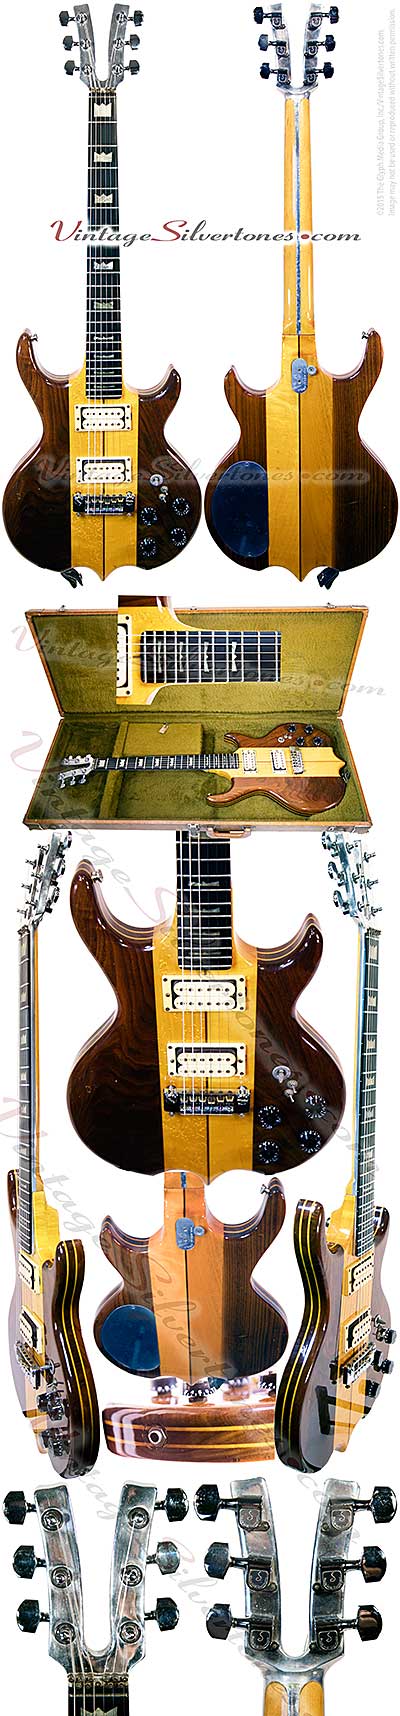 Kramer DMZ 6000-Neptune, NJ 2 humbucking active pickups, electric guitar, 1980, natural finish, double cutaway